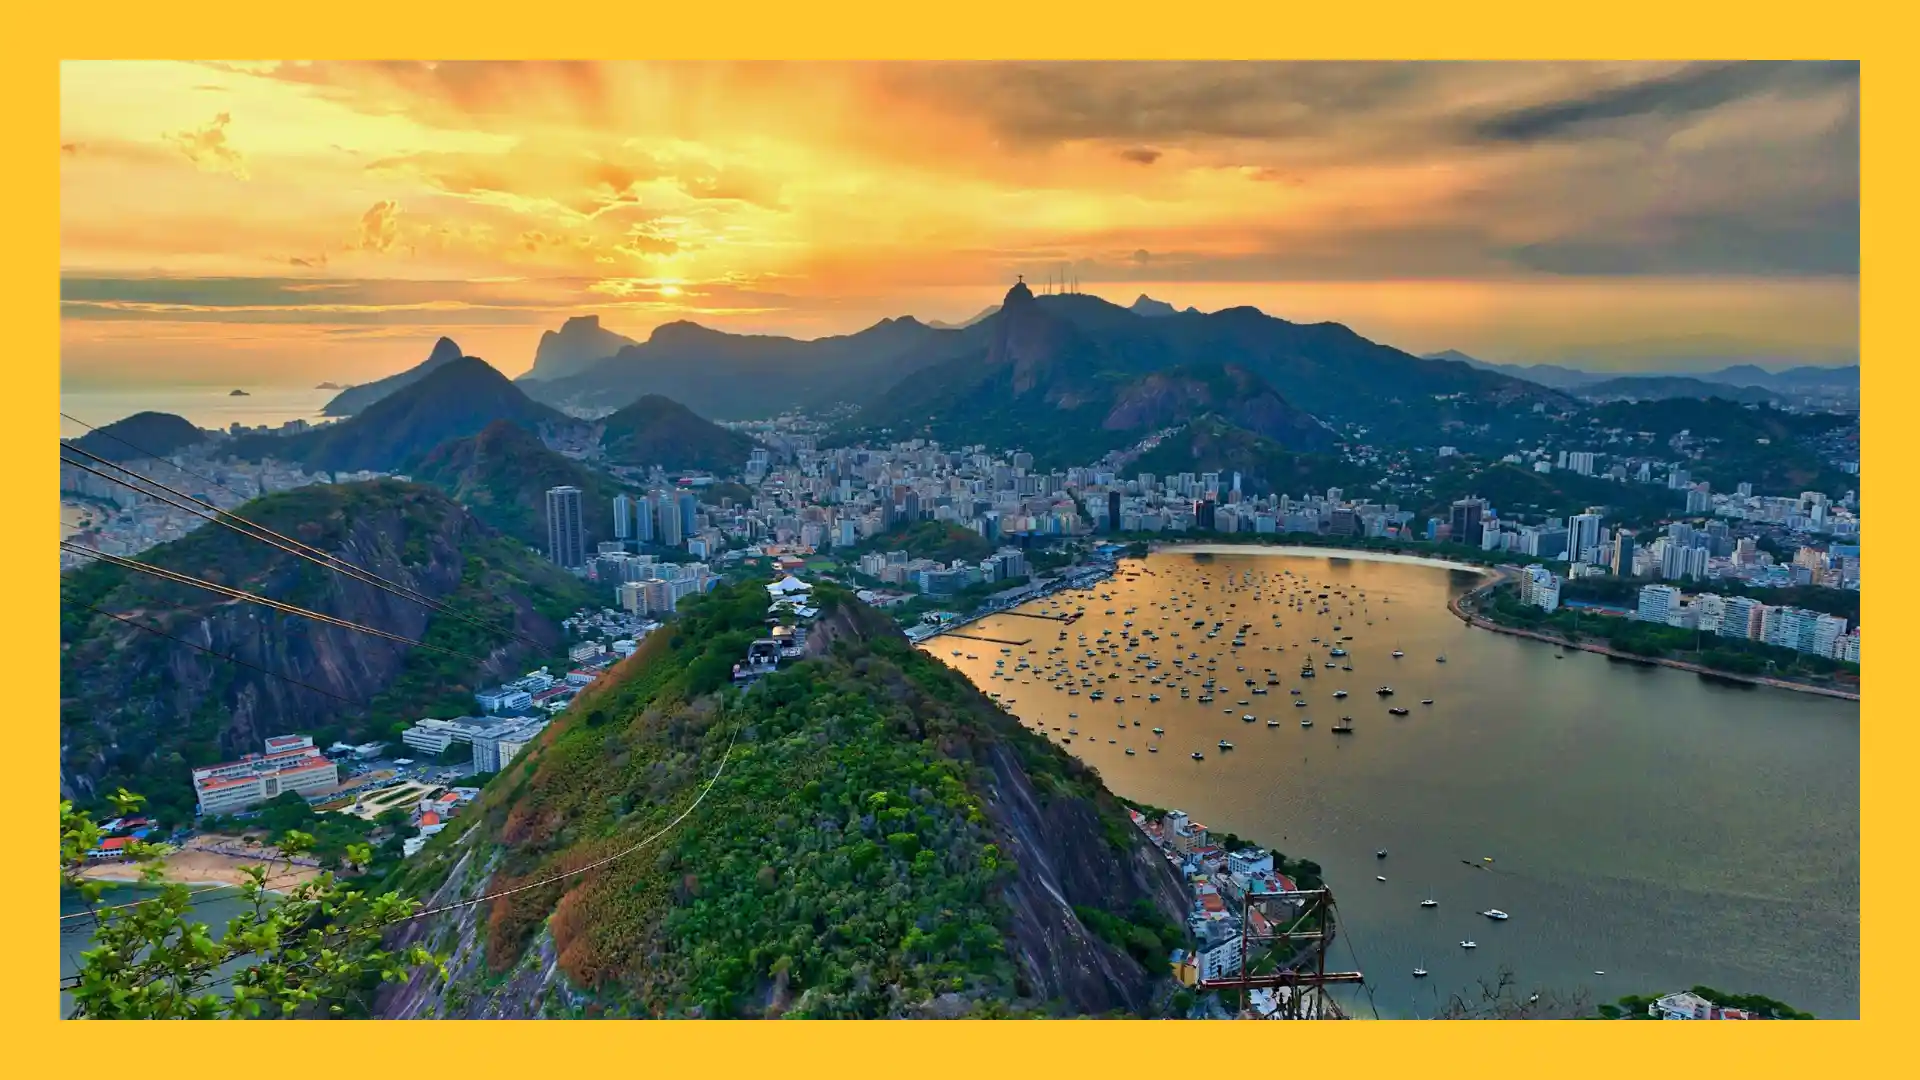 Tthe Brasil Game Show 2022 will be held in Rio de Janeiro